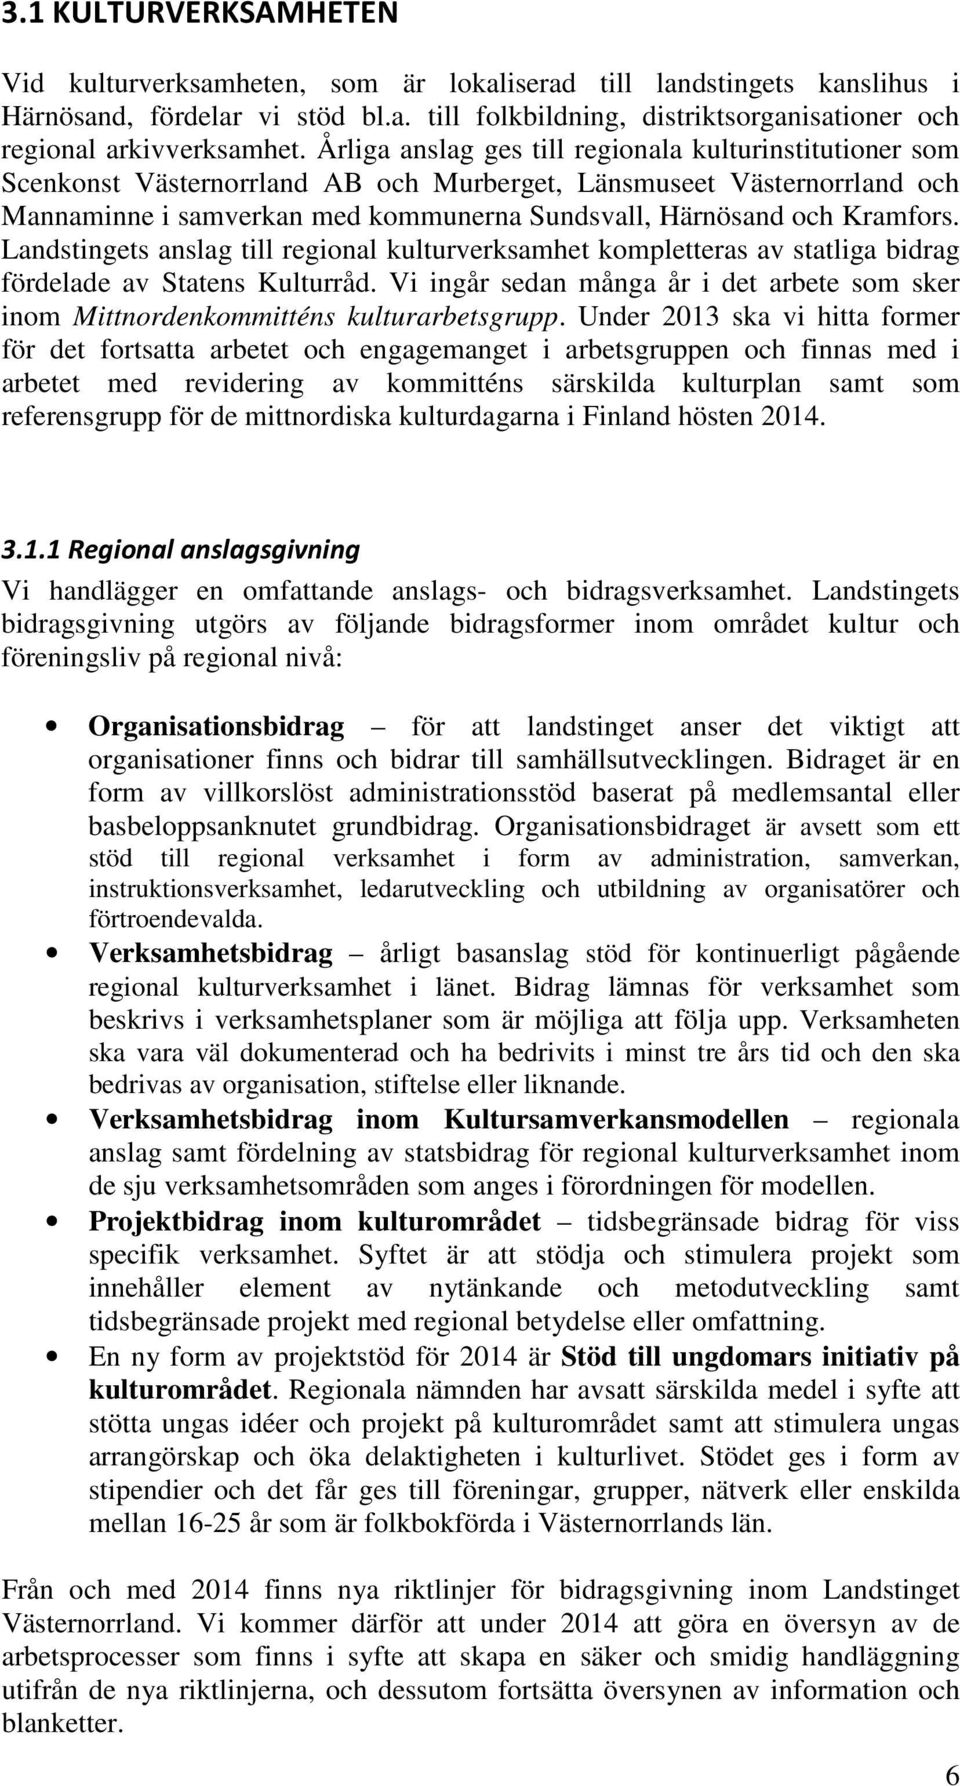 Kramfors. Landstingets anslag till regional kulturverksamhet kompletteras av statliga bidrag fördelade av Statens Kulturråd.